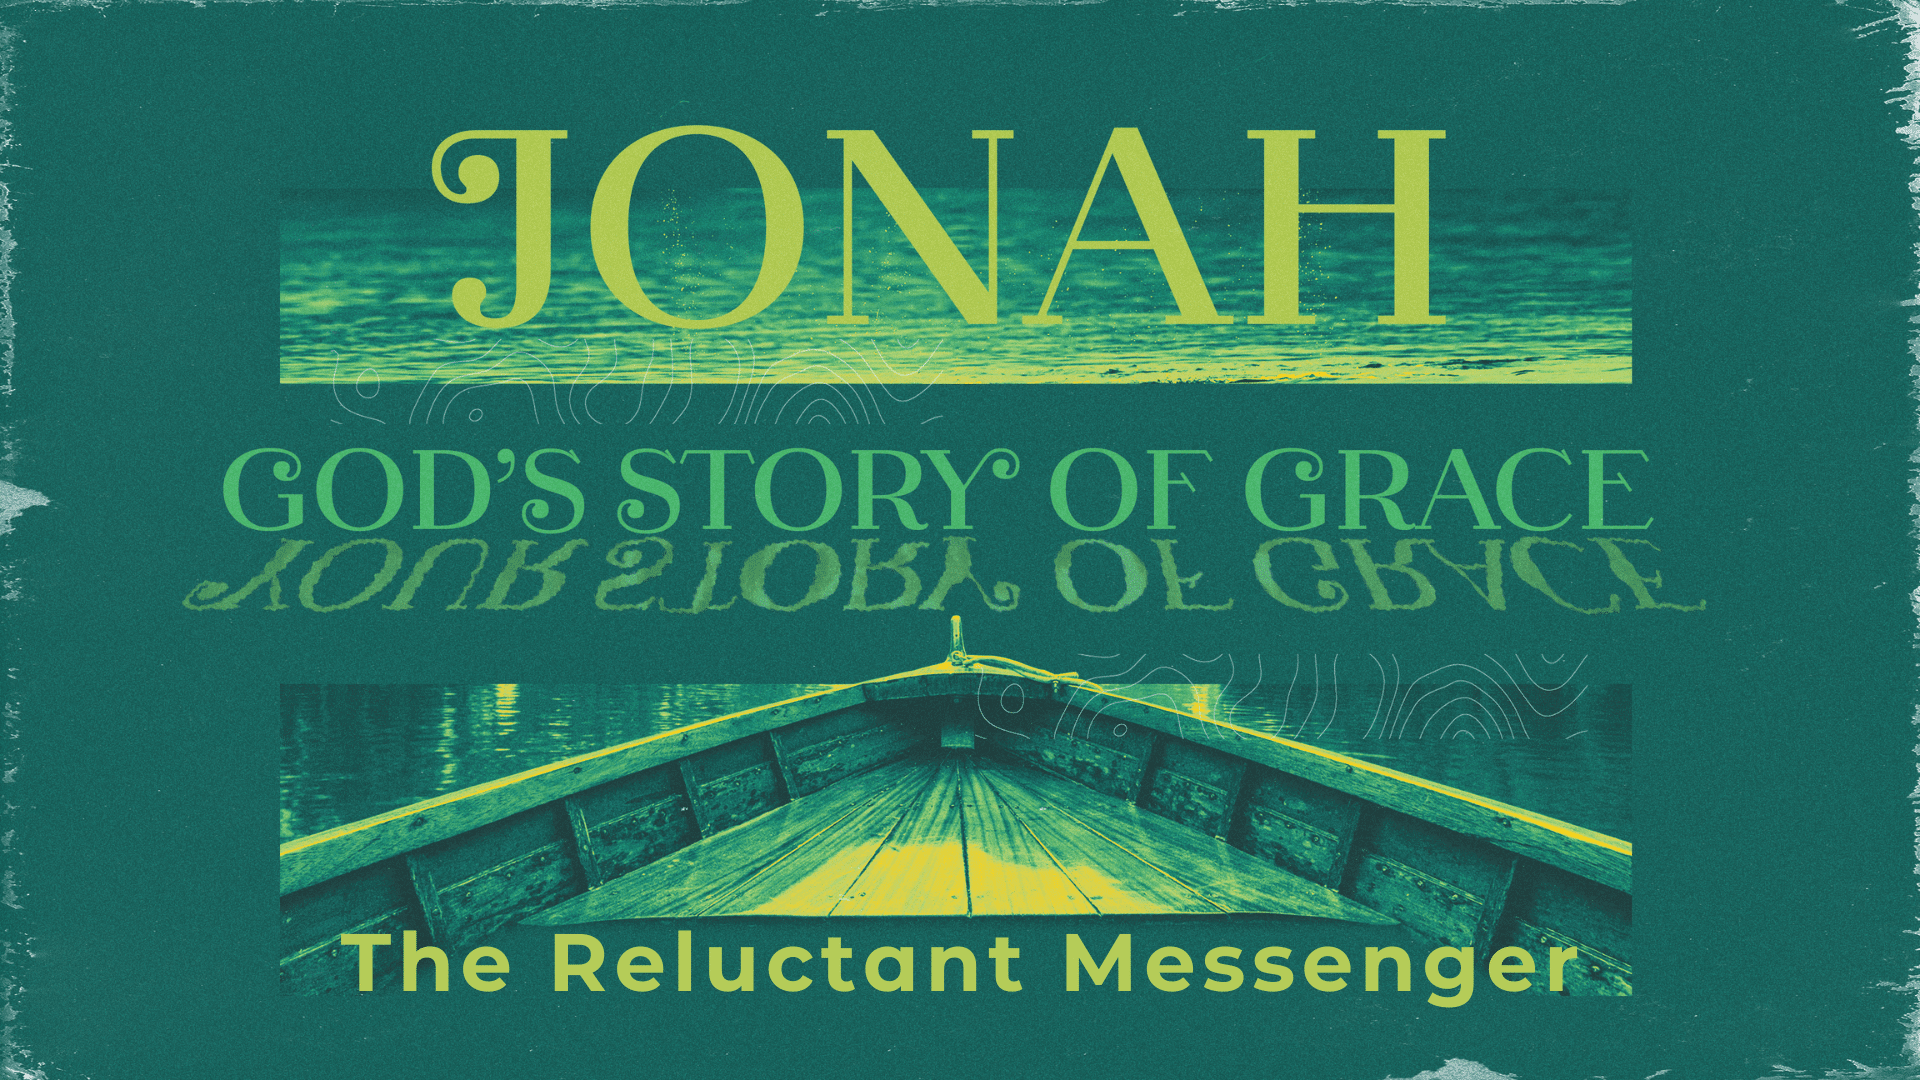 Jonah: The Reluctant Messenger